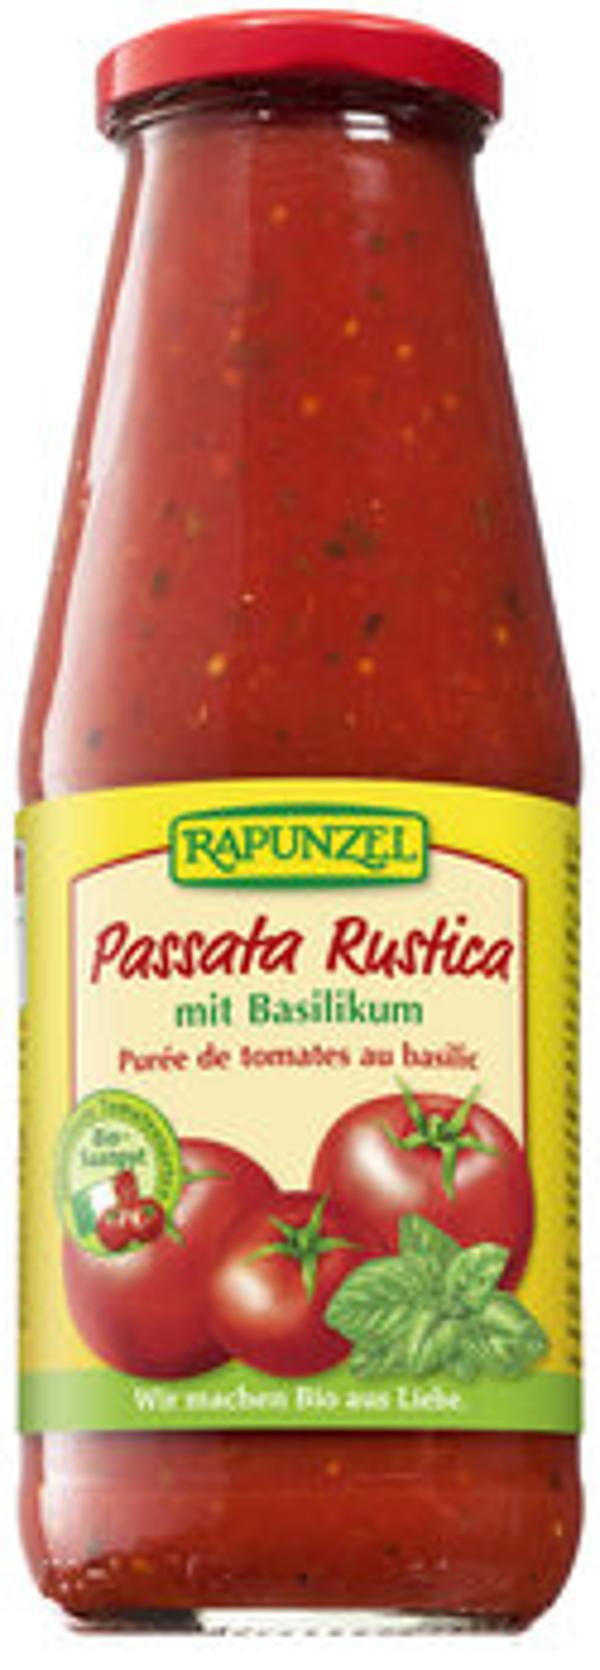 Produktfoto zu Passata Rustica mit Basilikum, 680 g